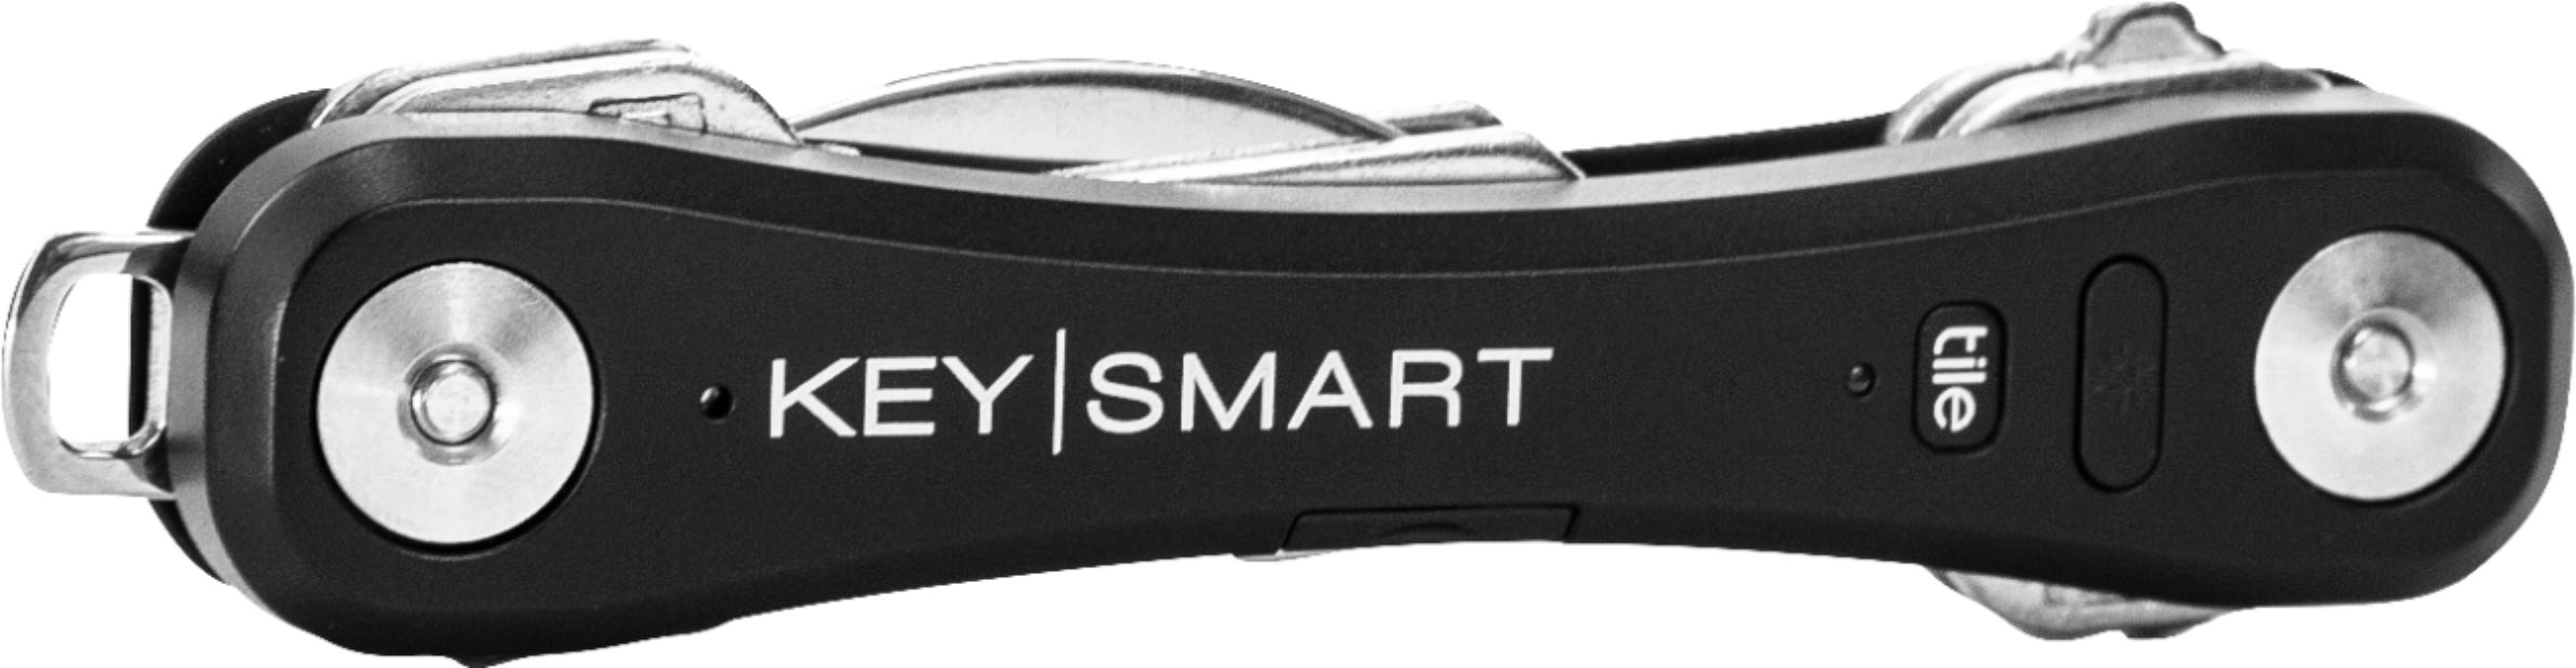 Angle View: KeySmart - Original Compact Key Holder - Black